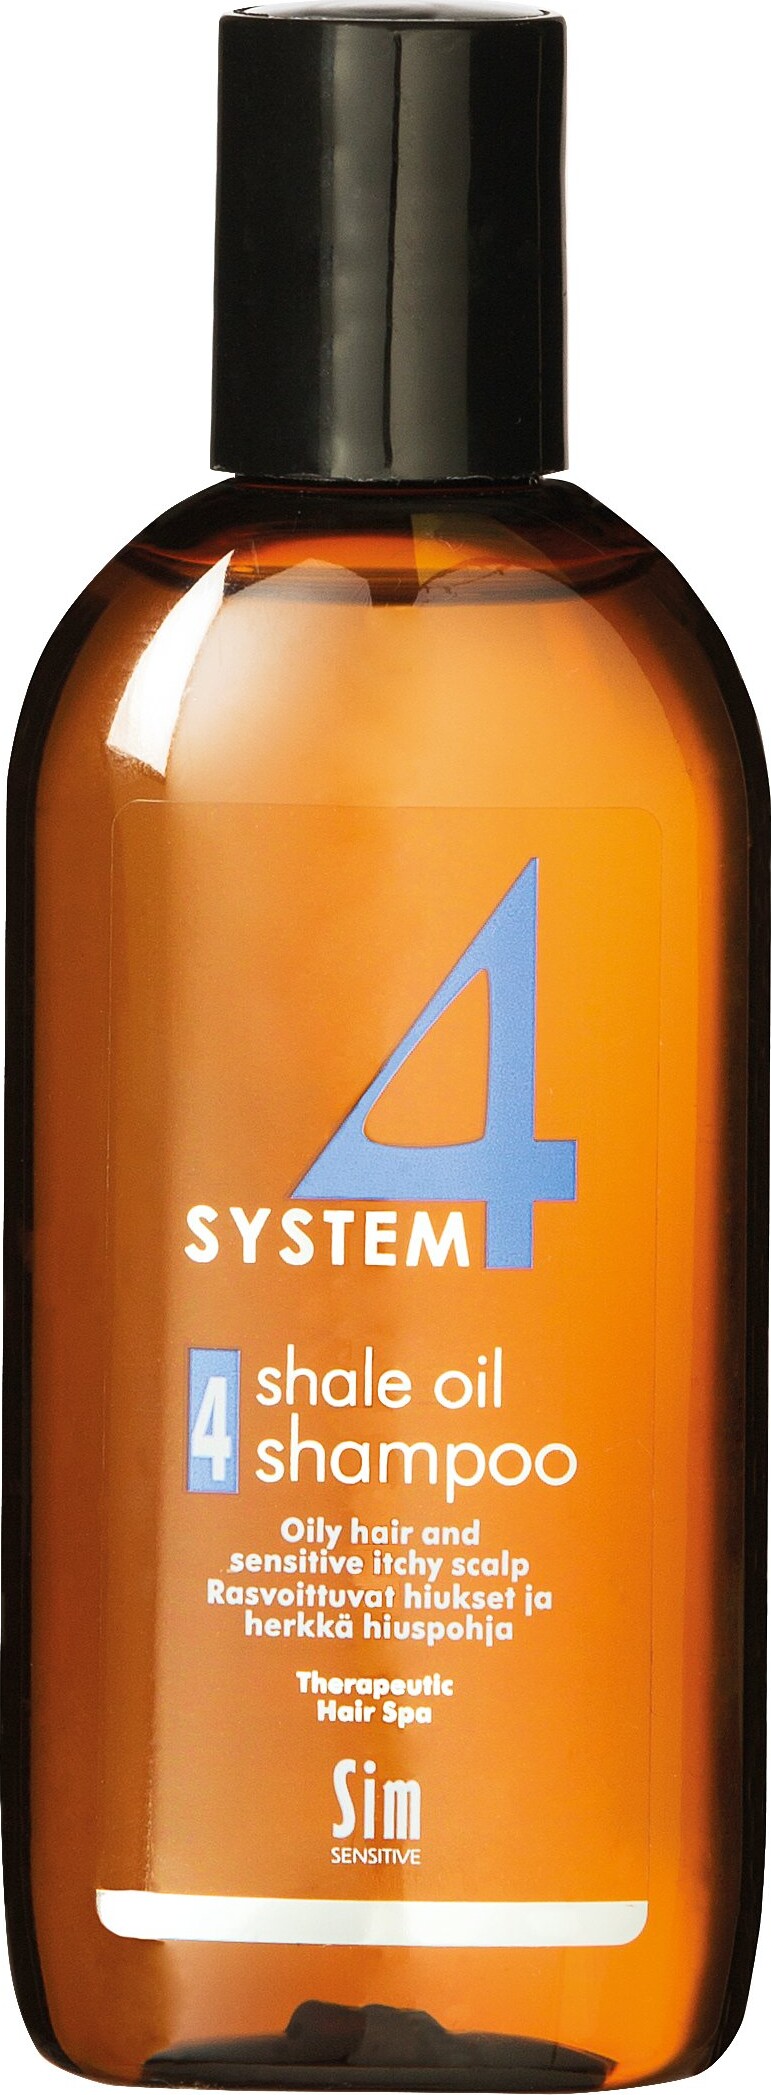 System 4 - Shale Oil Shampoo 4 - 100 Ml